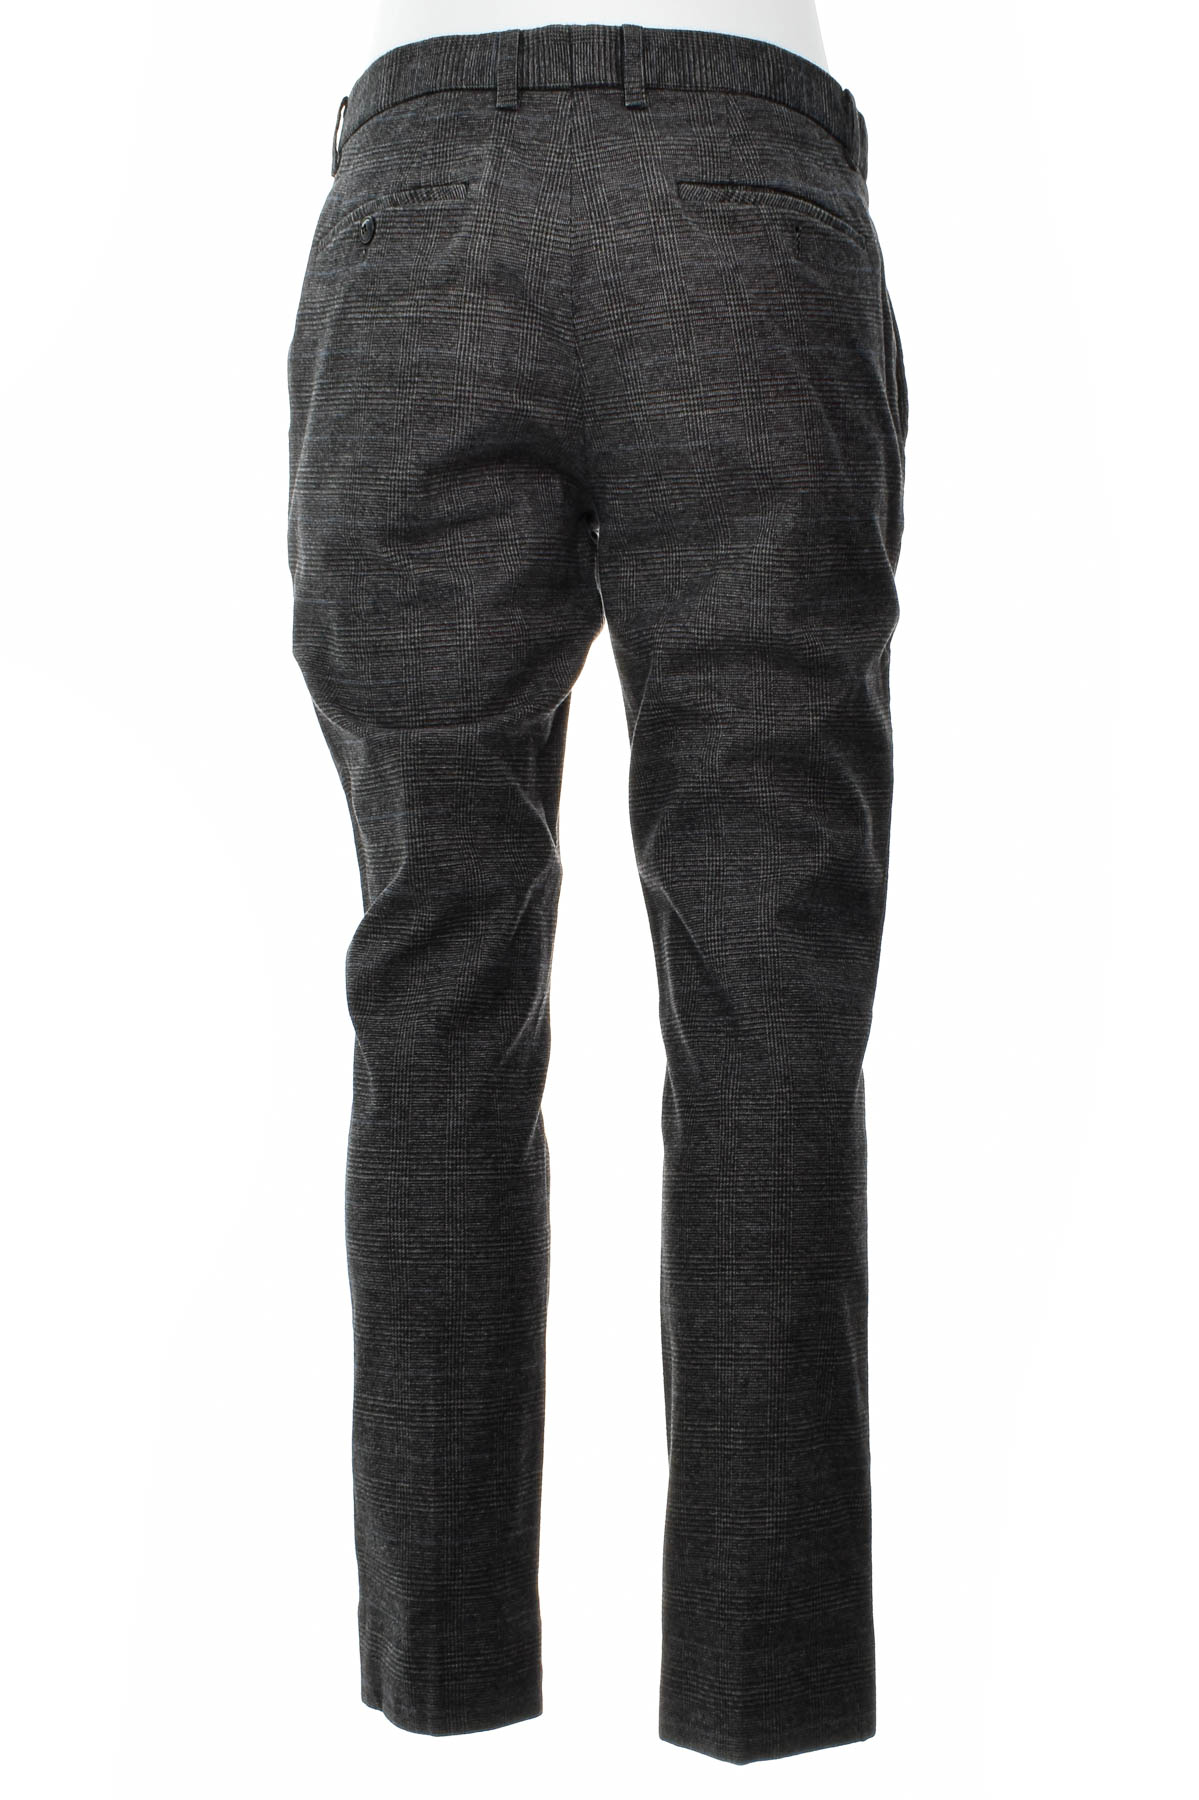 Men's trousers - Comodo SQUARE - 1